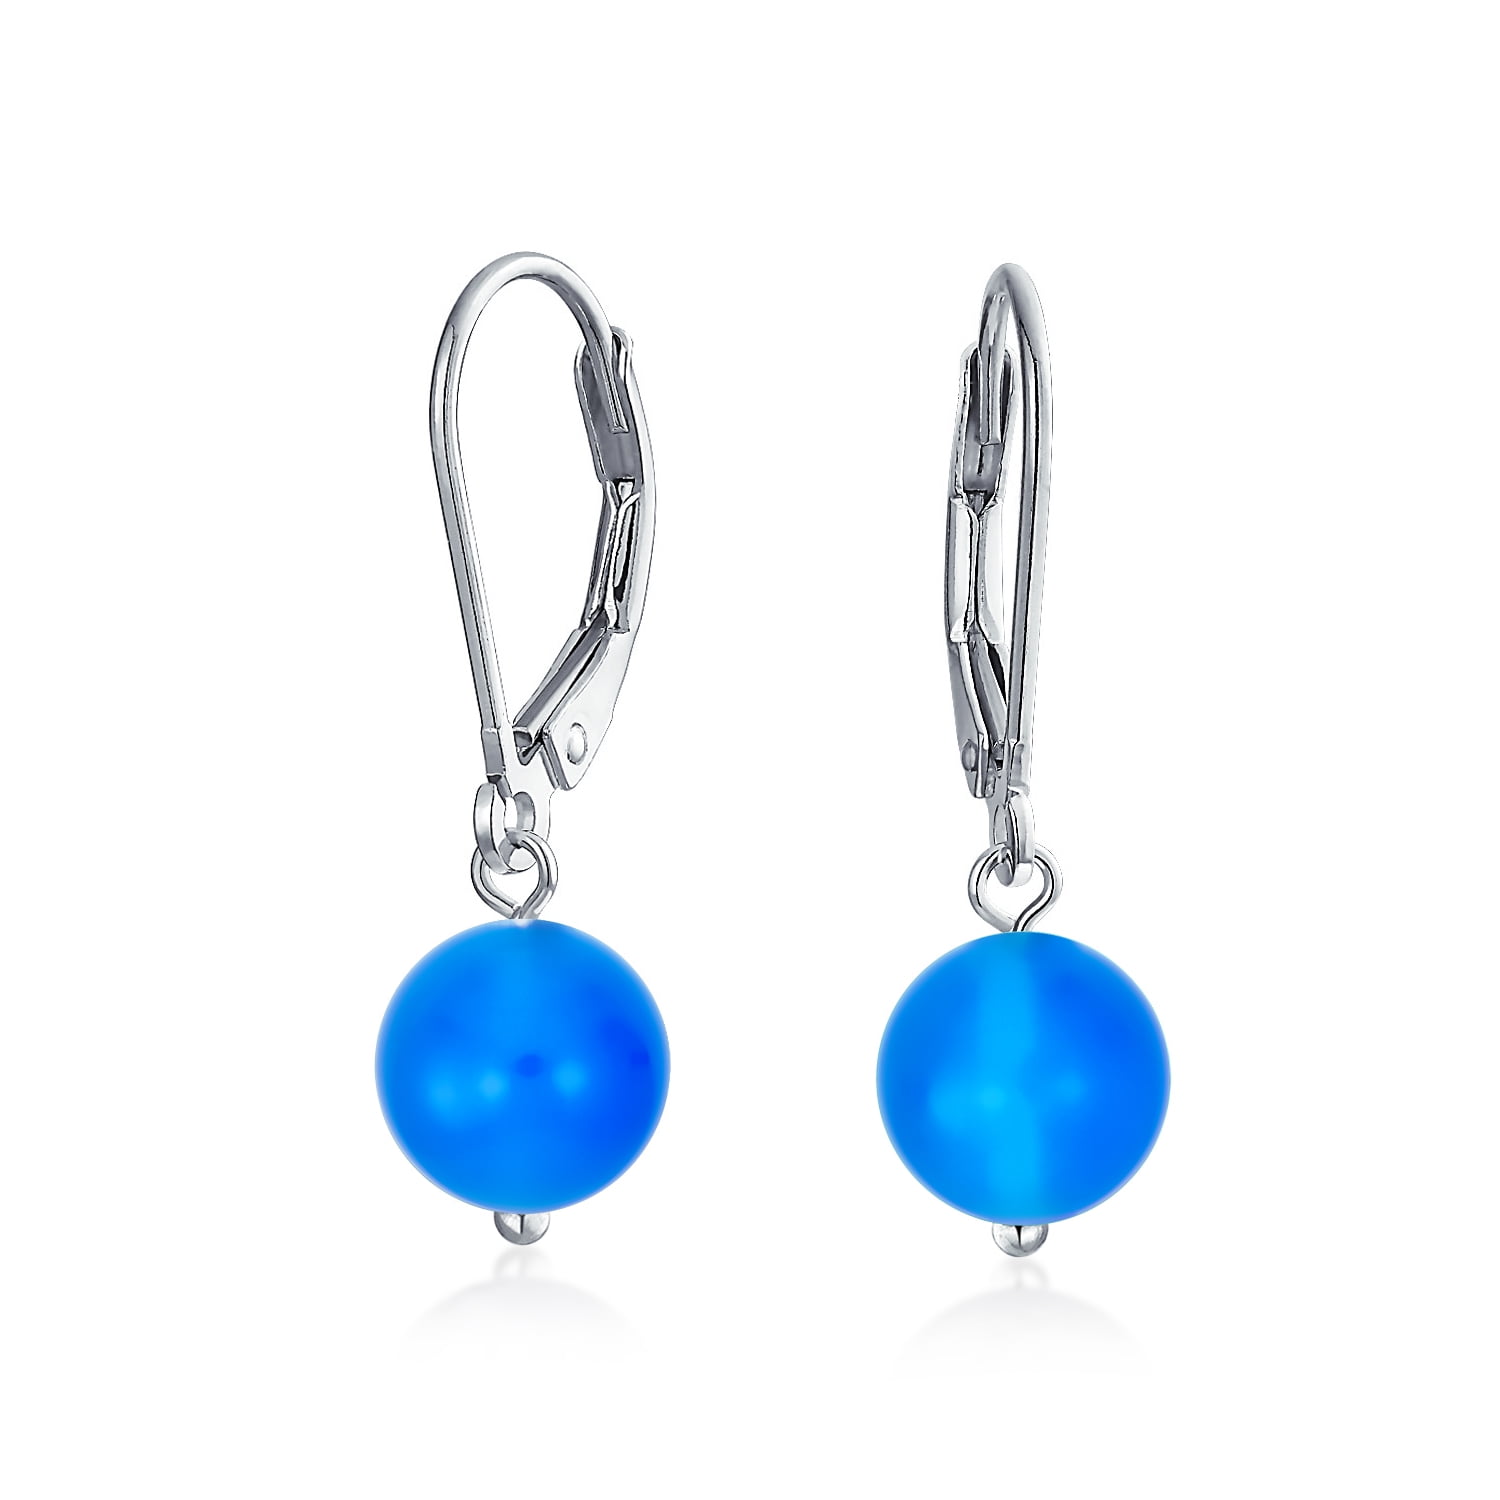 Sky Blue Diamante Ball Drop Earrings In Silver Plated Finish 12mm Diameter/